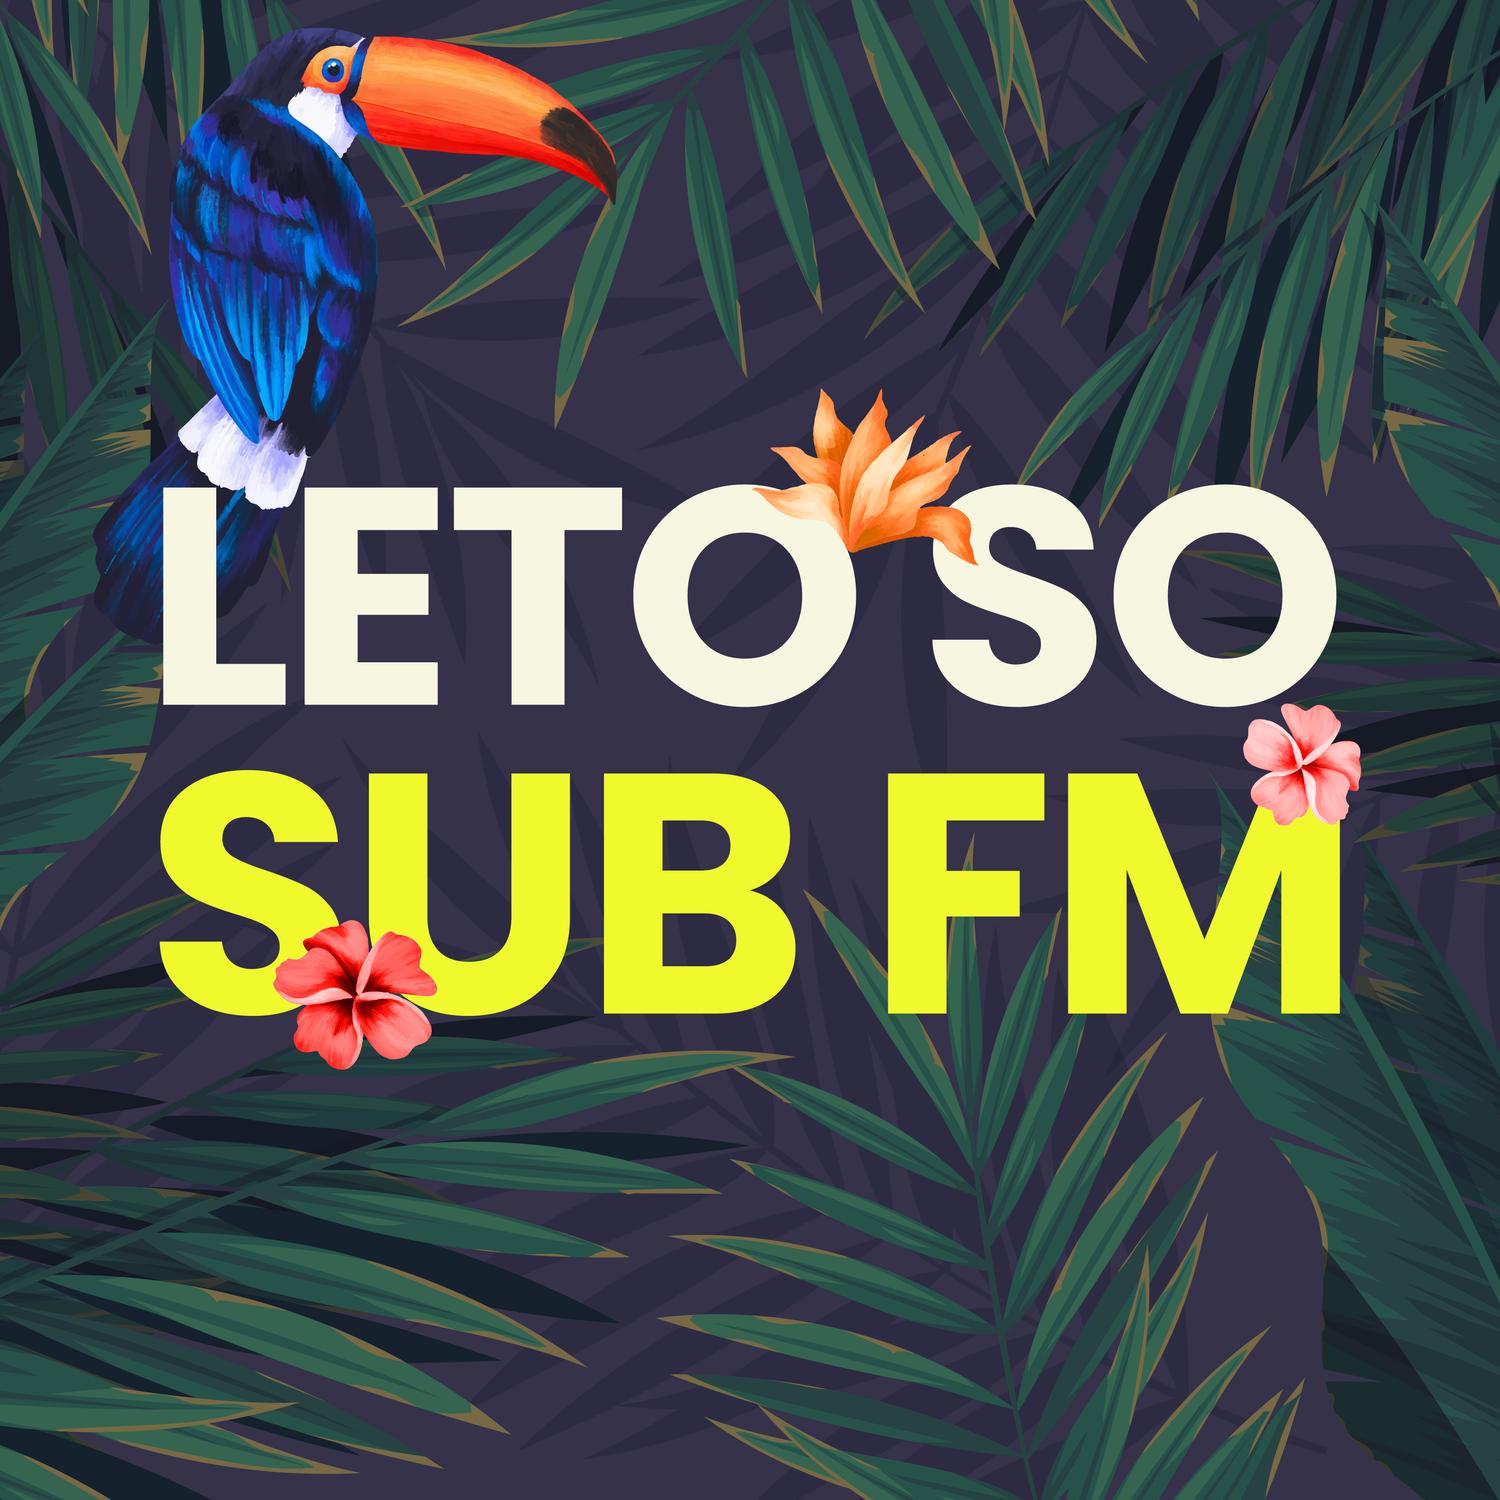 Leto so SUB FM